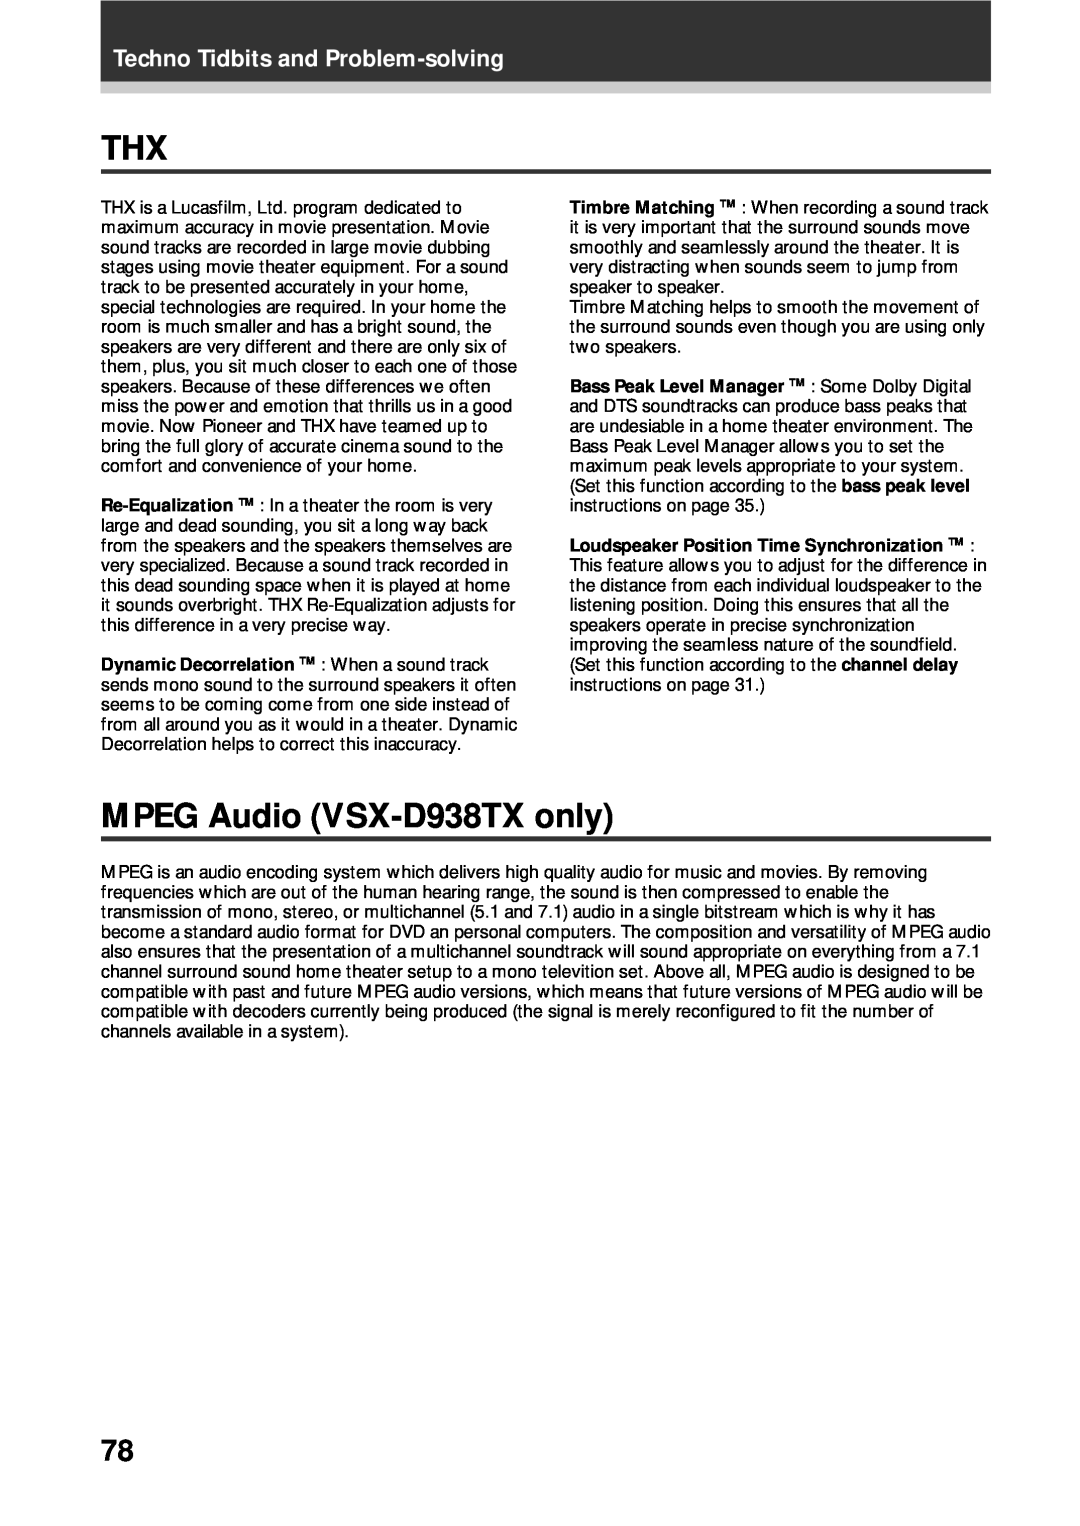 Pioneer VSX-D908TX-G manual MPEG Audio VSX-D938TXonly, Techno Tidbits and Problem-solving 